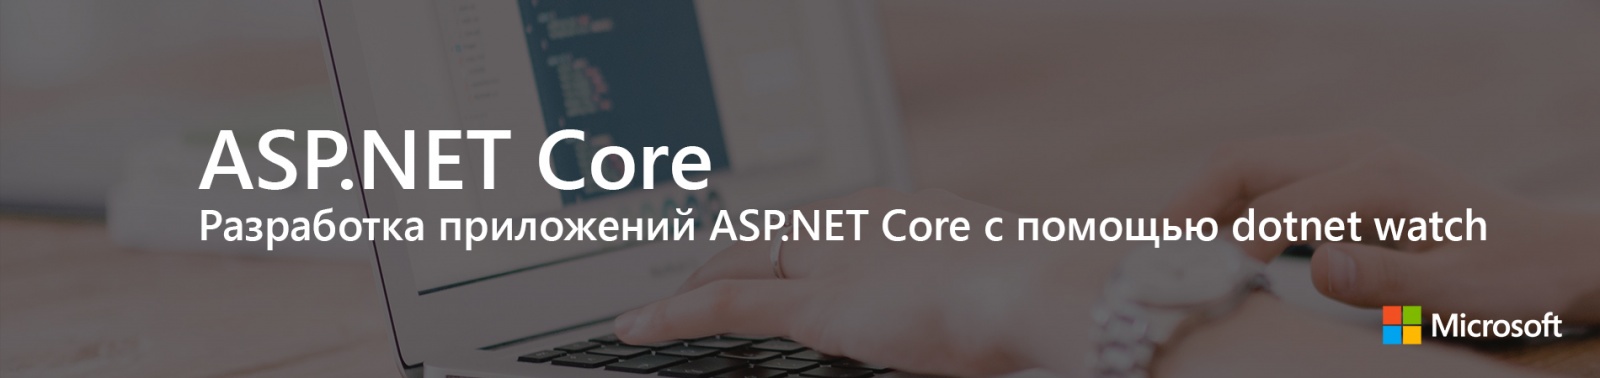 ASP.NET Core: Разработка приложений ASP.NET Core с помощью dotnet watch - 1